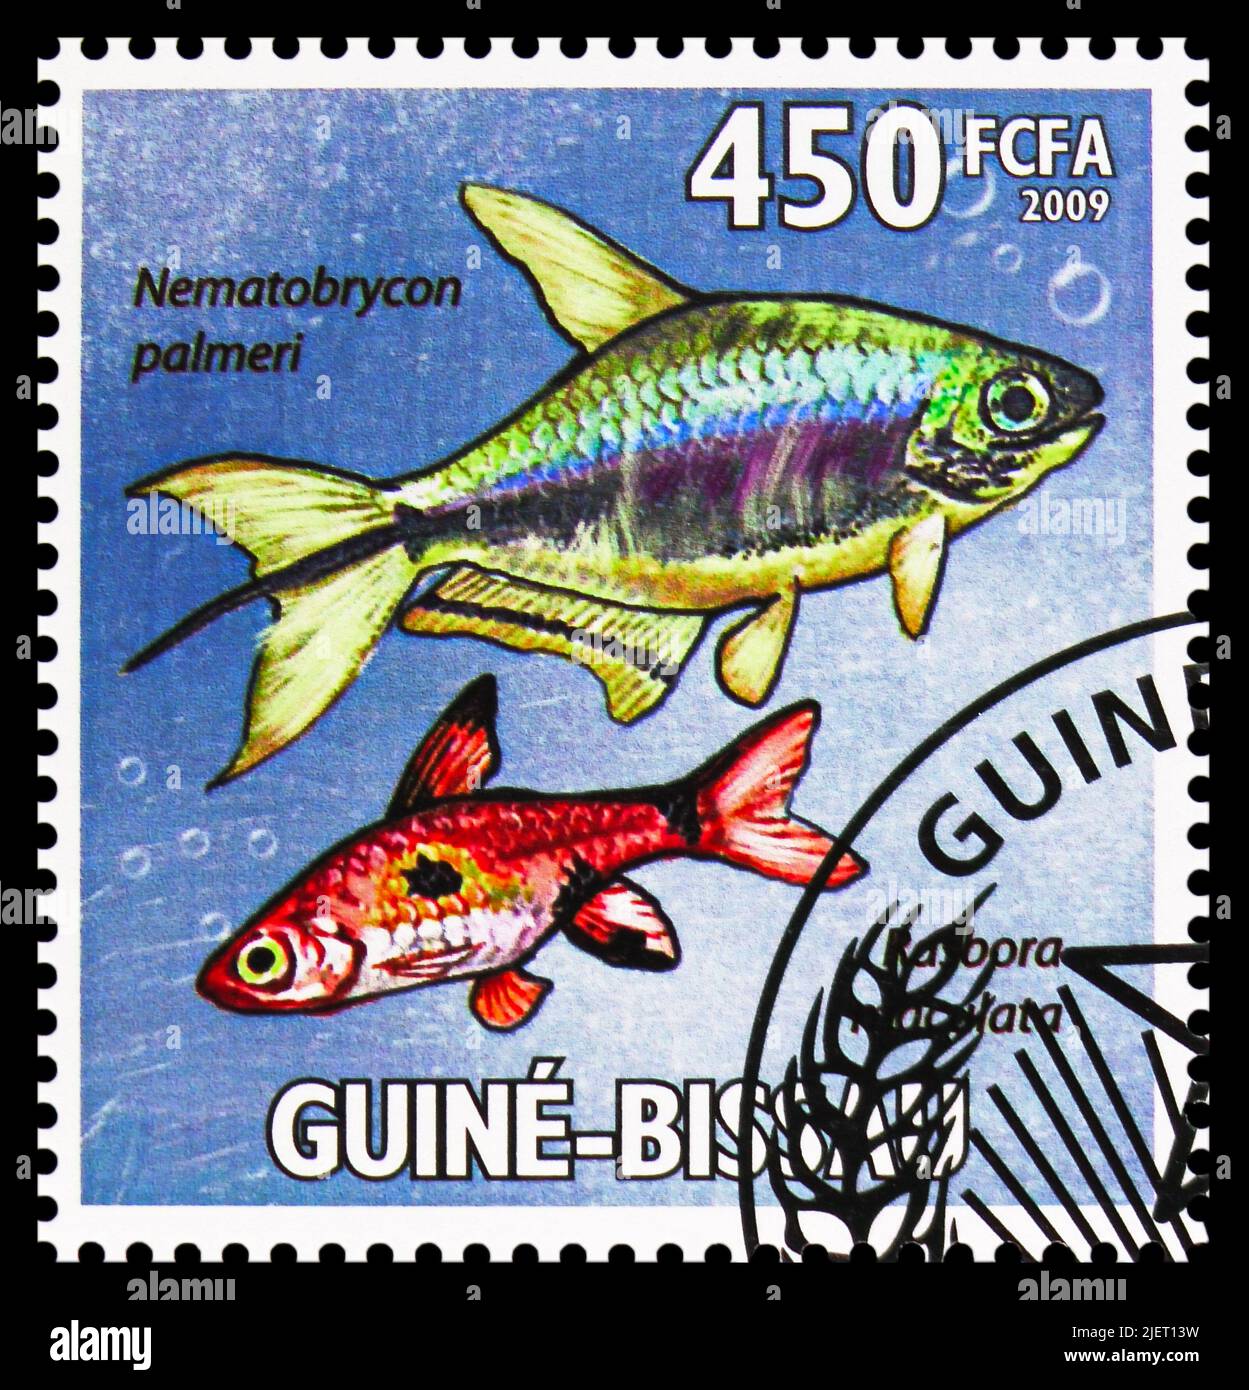 MOSCOW, RUSSIA - JUNE 17, 2022: Postage stamp printed in Guinea-Bissau shows Emperor Tetra (Nematobrycon palmeri), Rasbora maculata (Boraras maculatus Stock Photo